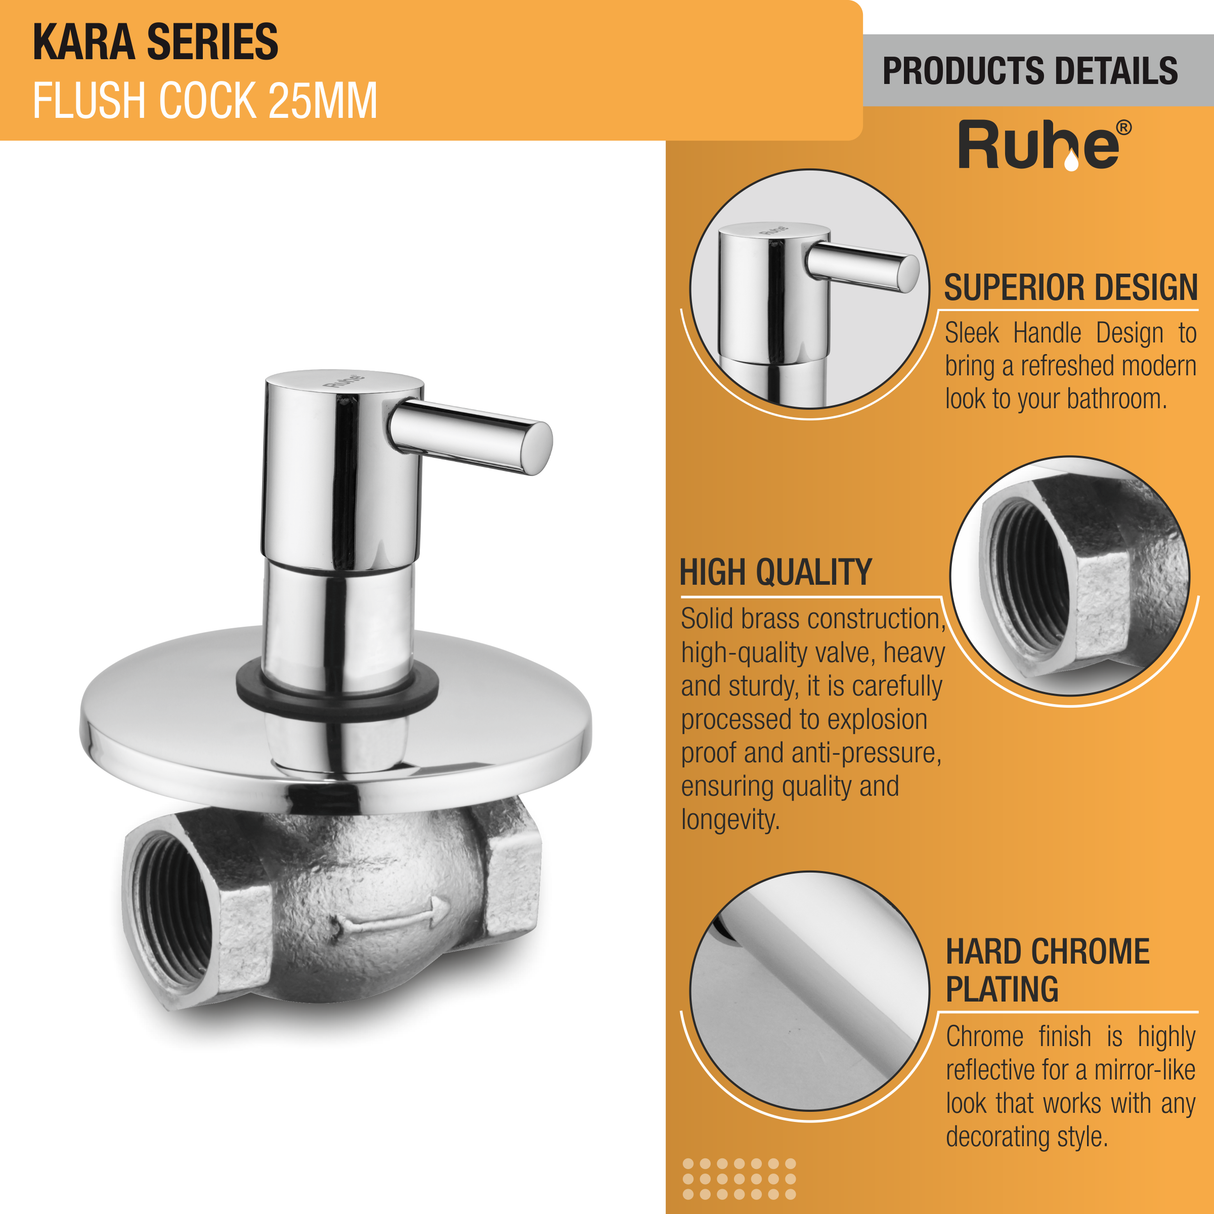 Kara Flush Cock 25mm Faucet details